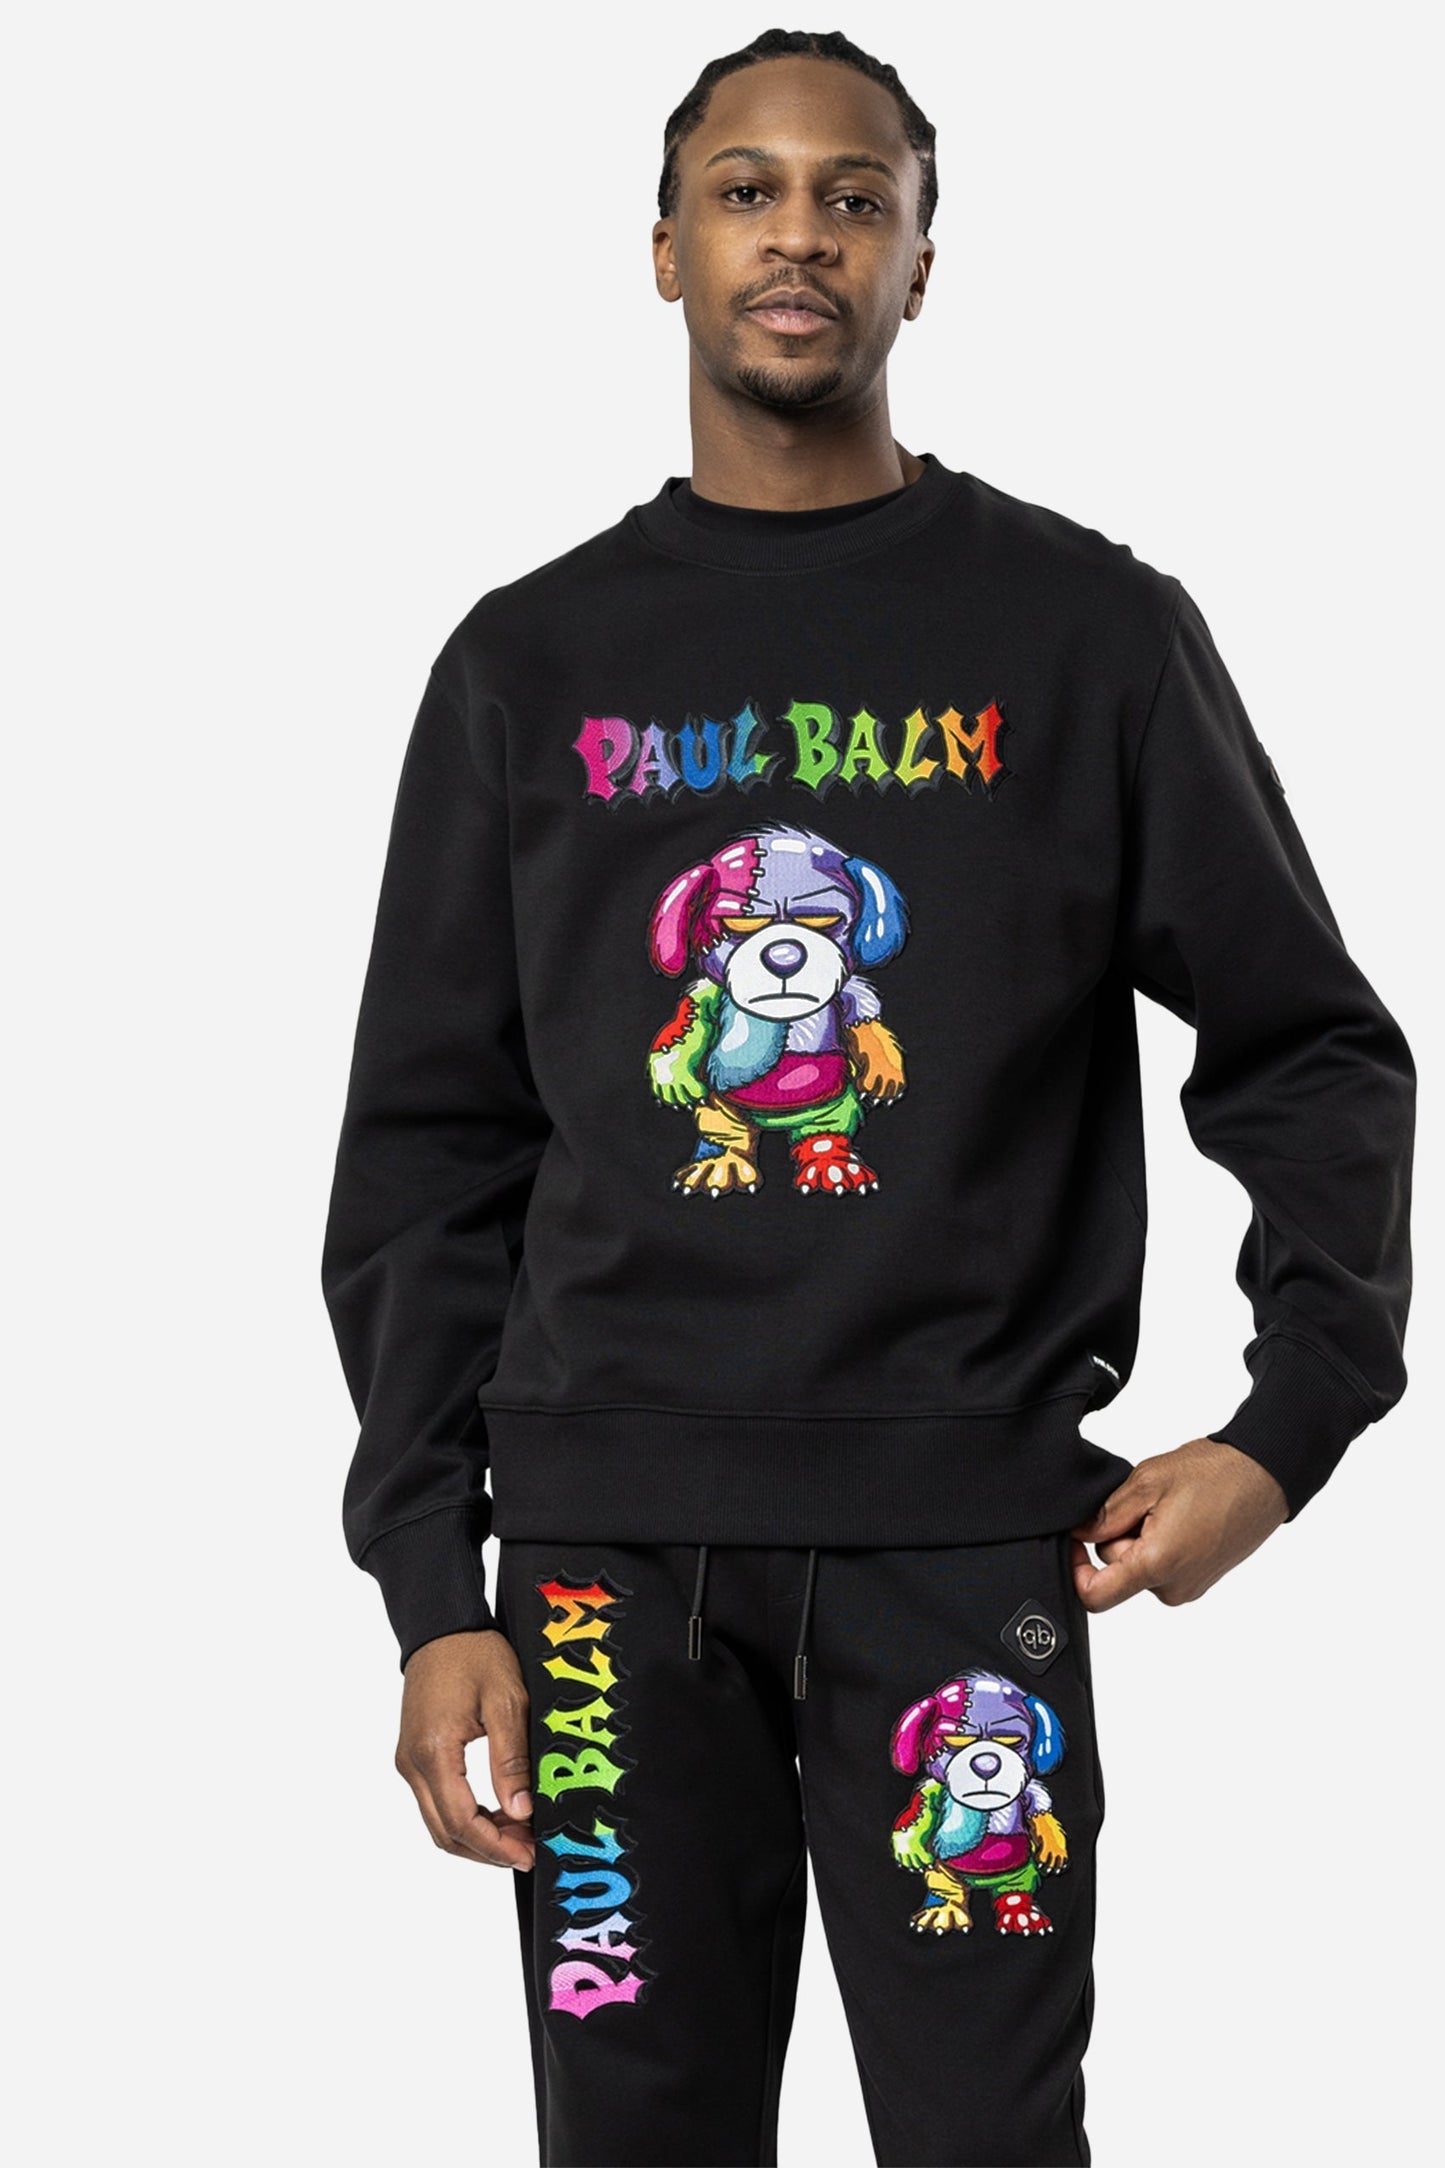 Embroidered Rainbow Teddy Sweatshirt - Limited to 300 - PAUL BALM WORLD